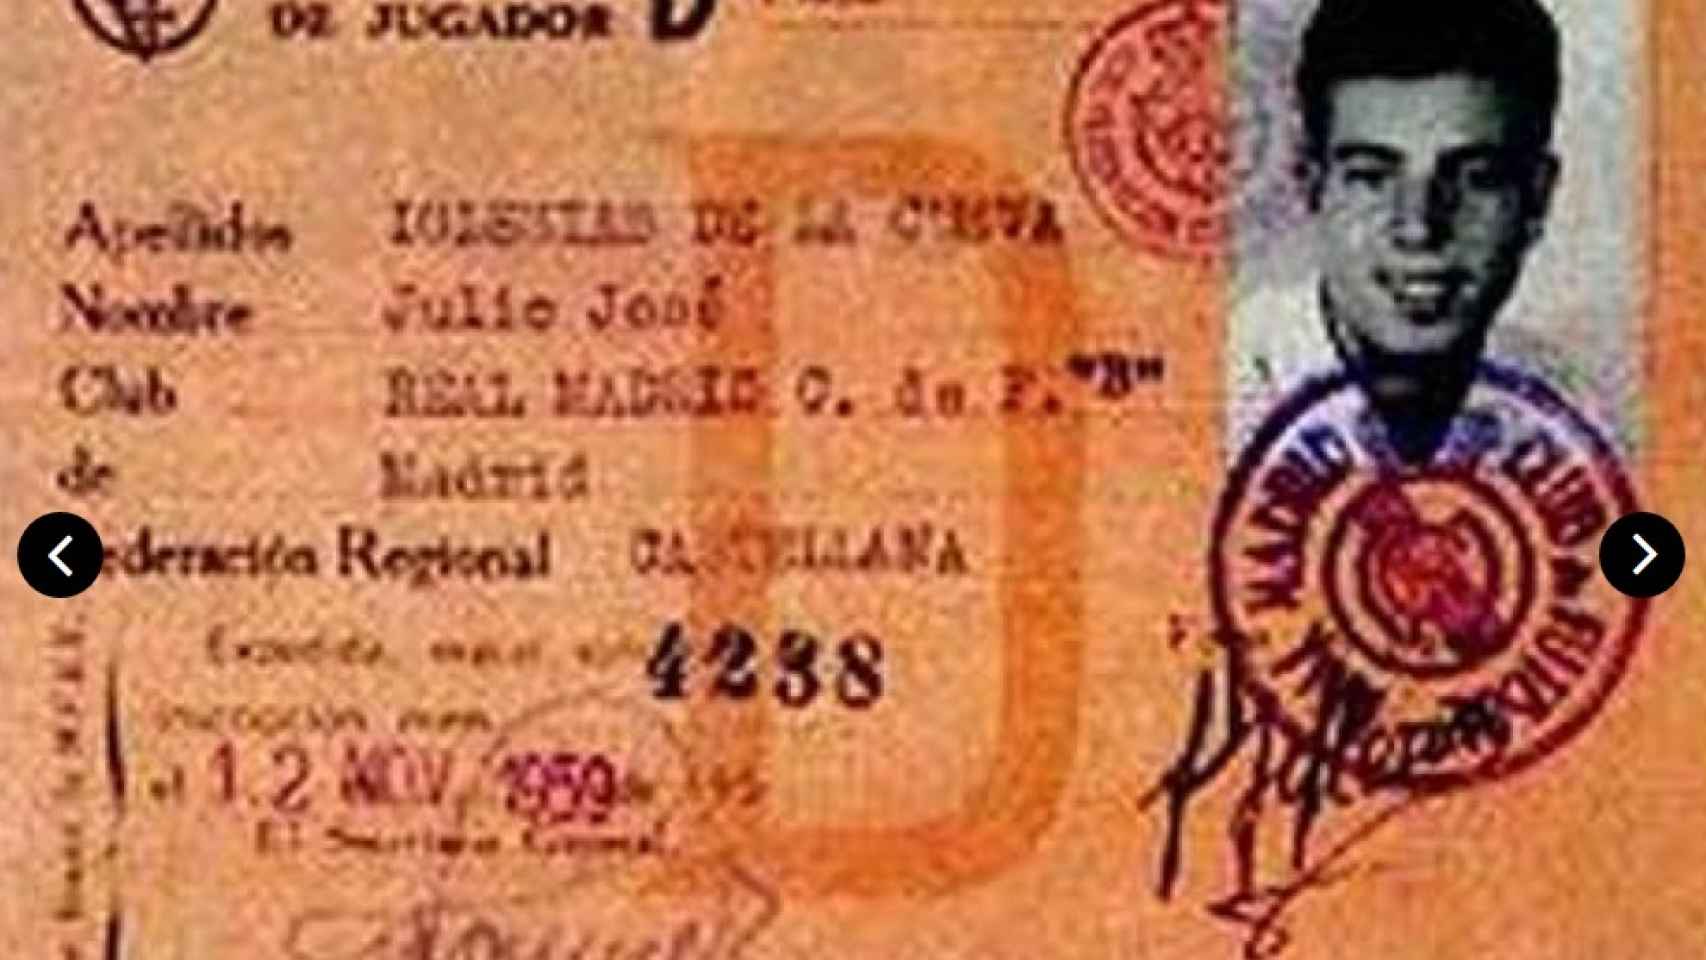 Carnet de futbolista de Julio Iglesias.